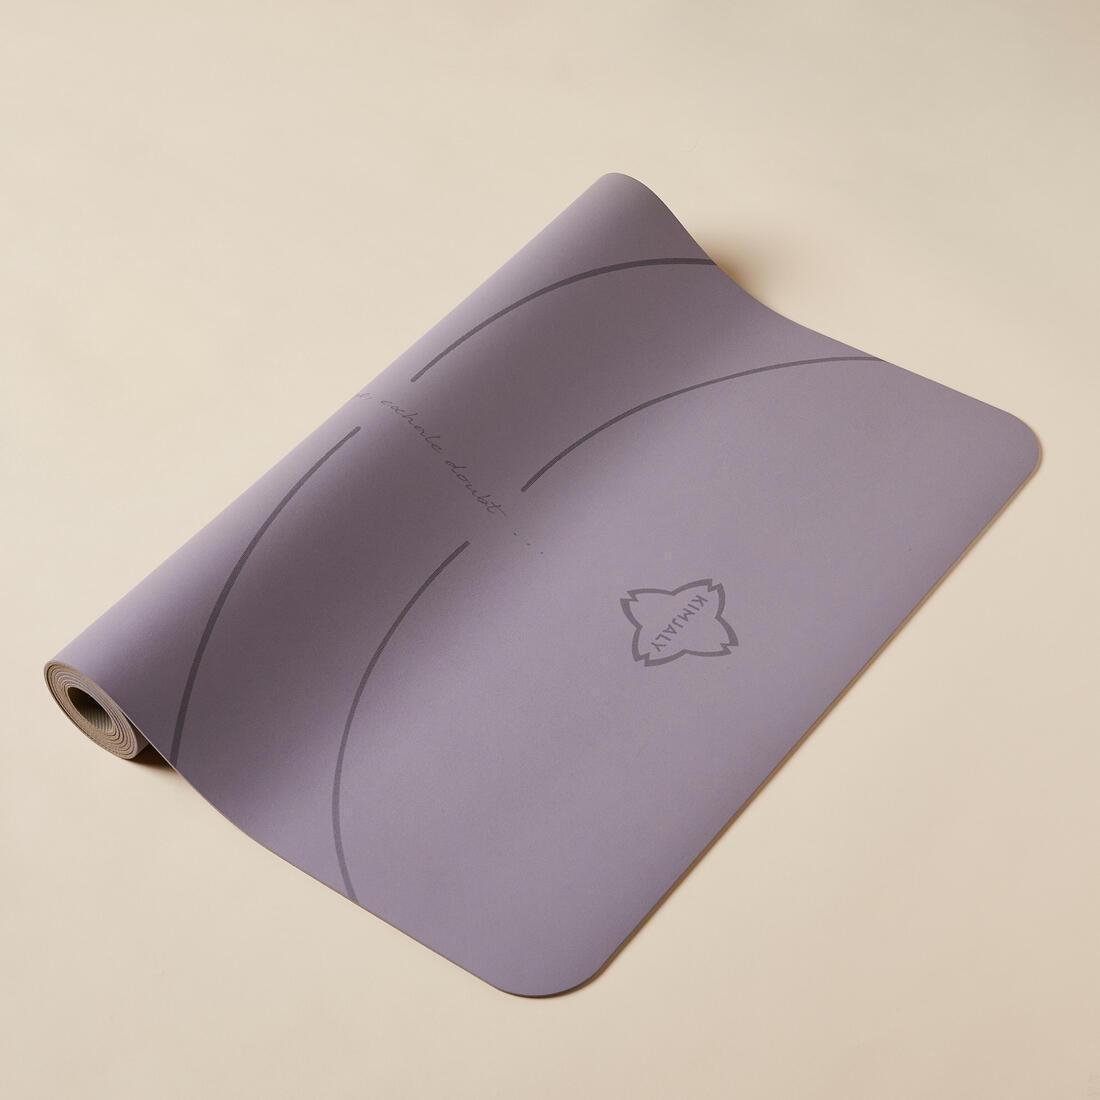 KIMJALY Yoga Mat Grip, Purple